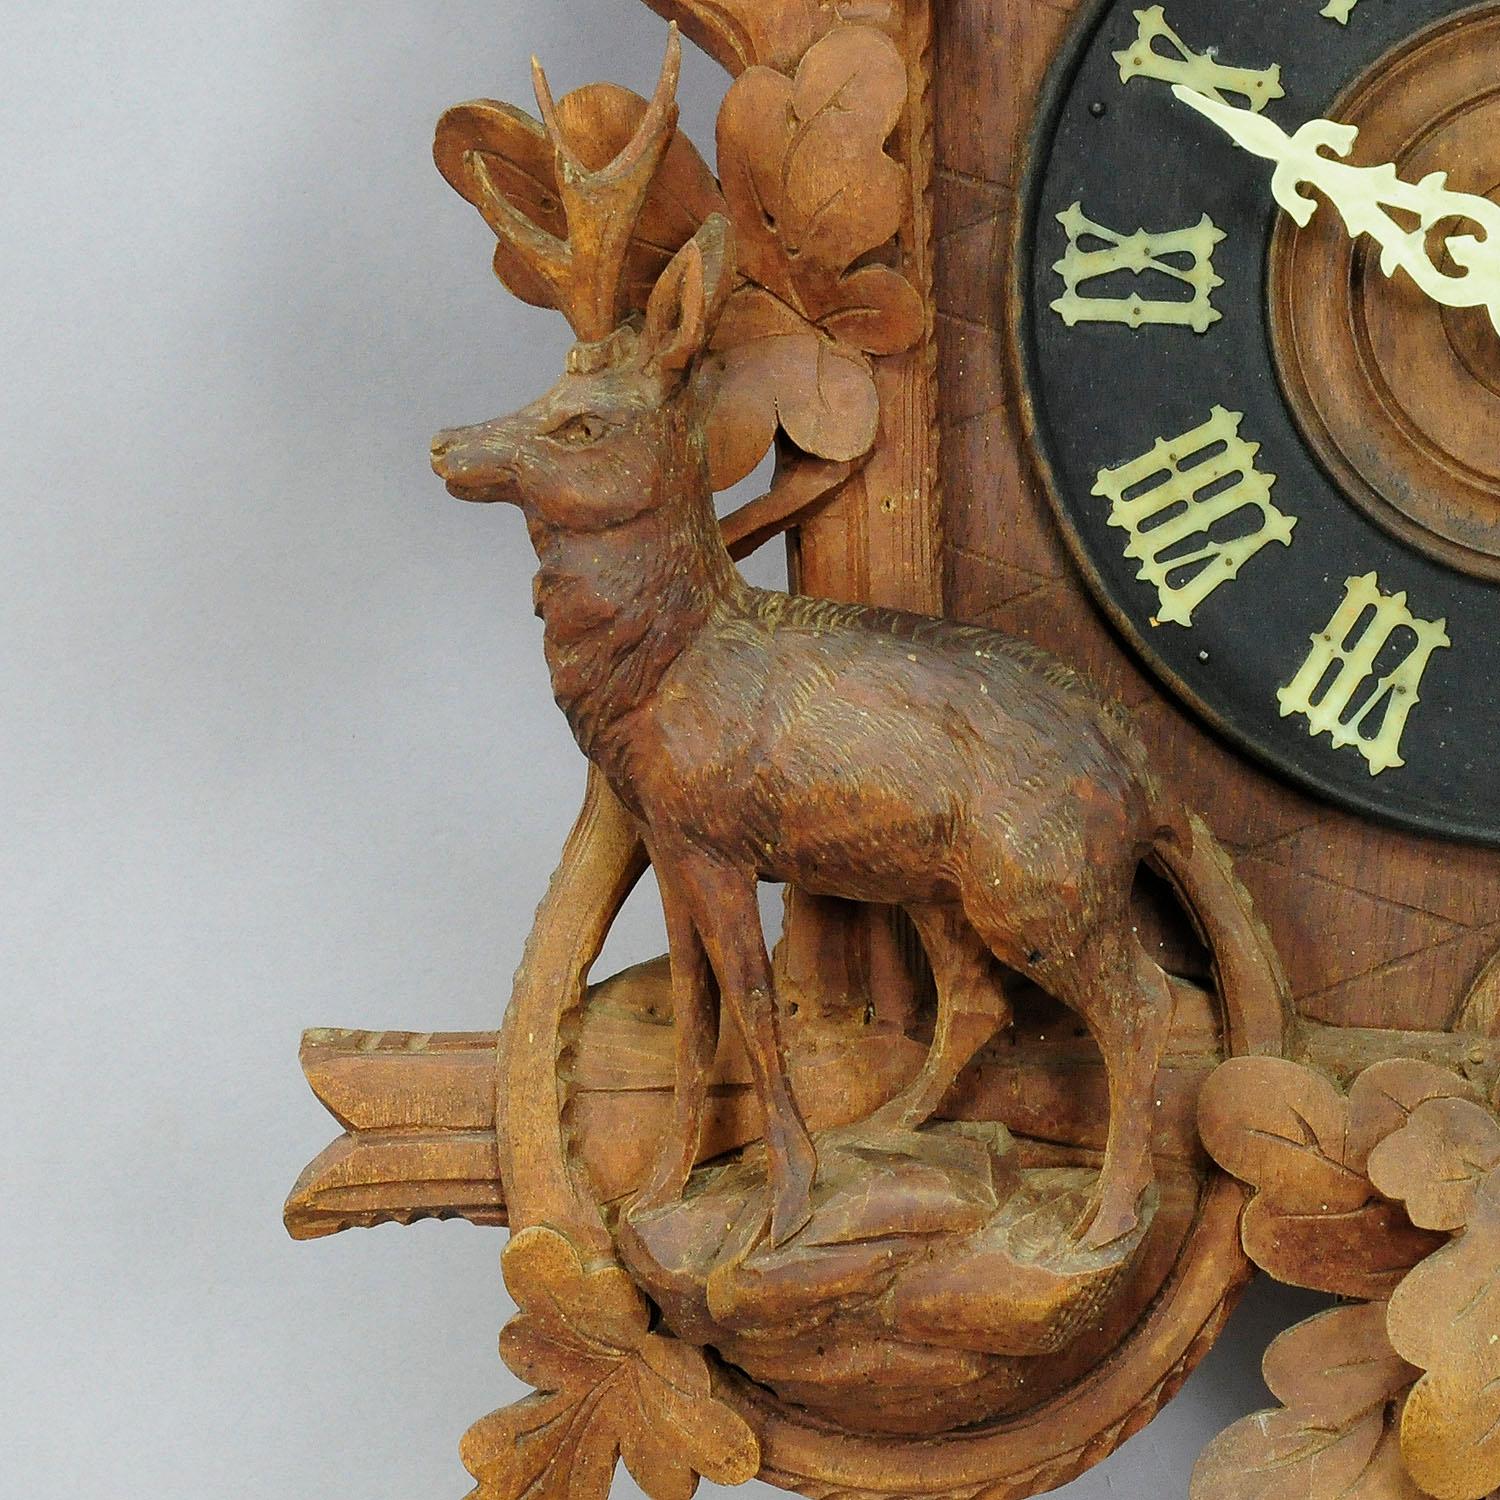 antique cuckoo clocks for sale